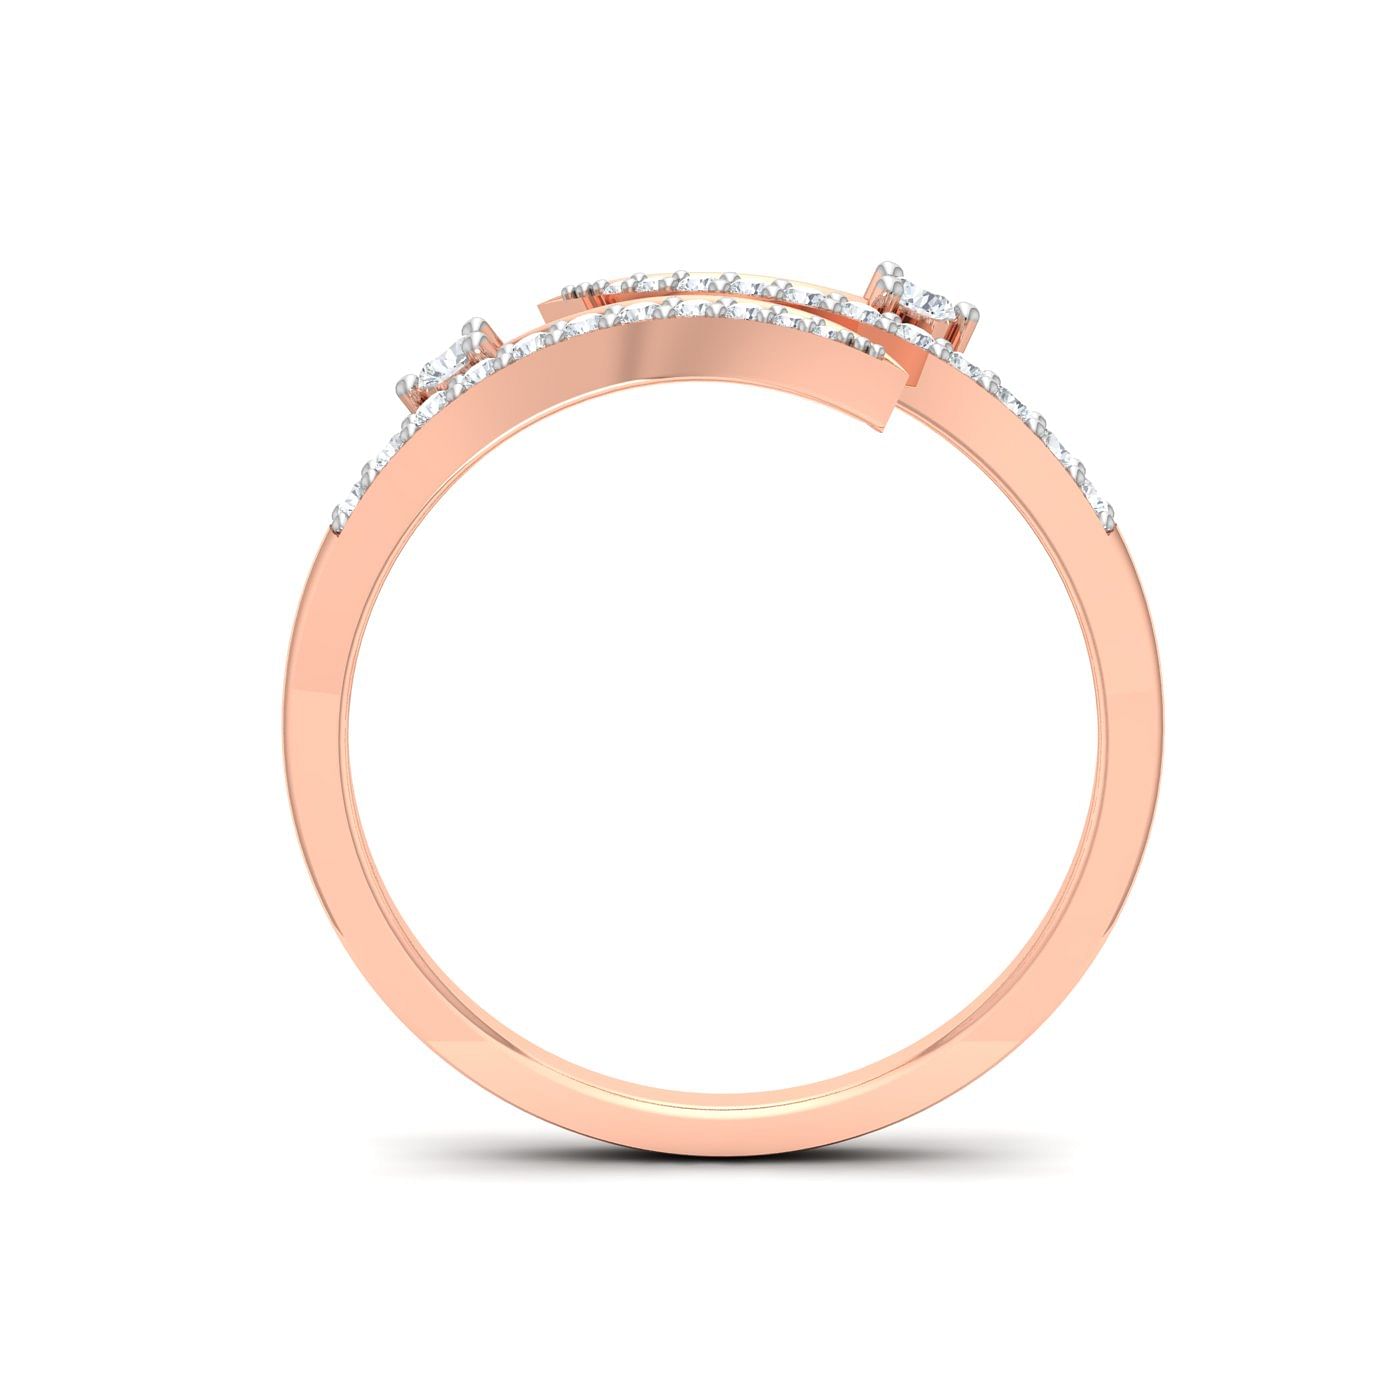 modern diamond ring designs in rose gold